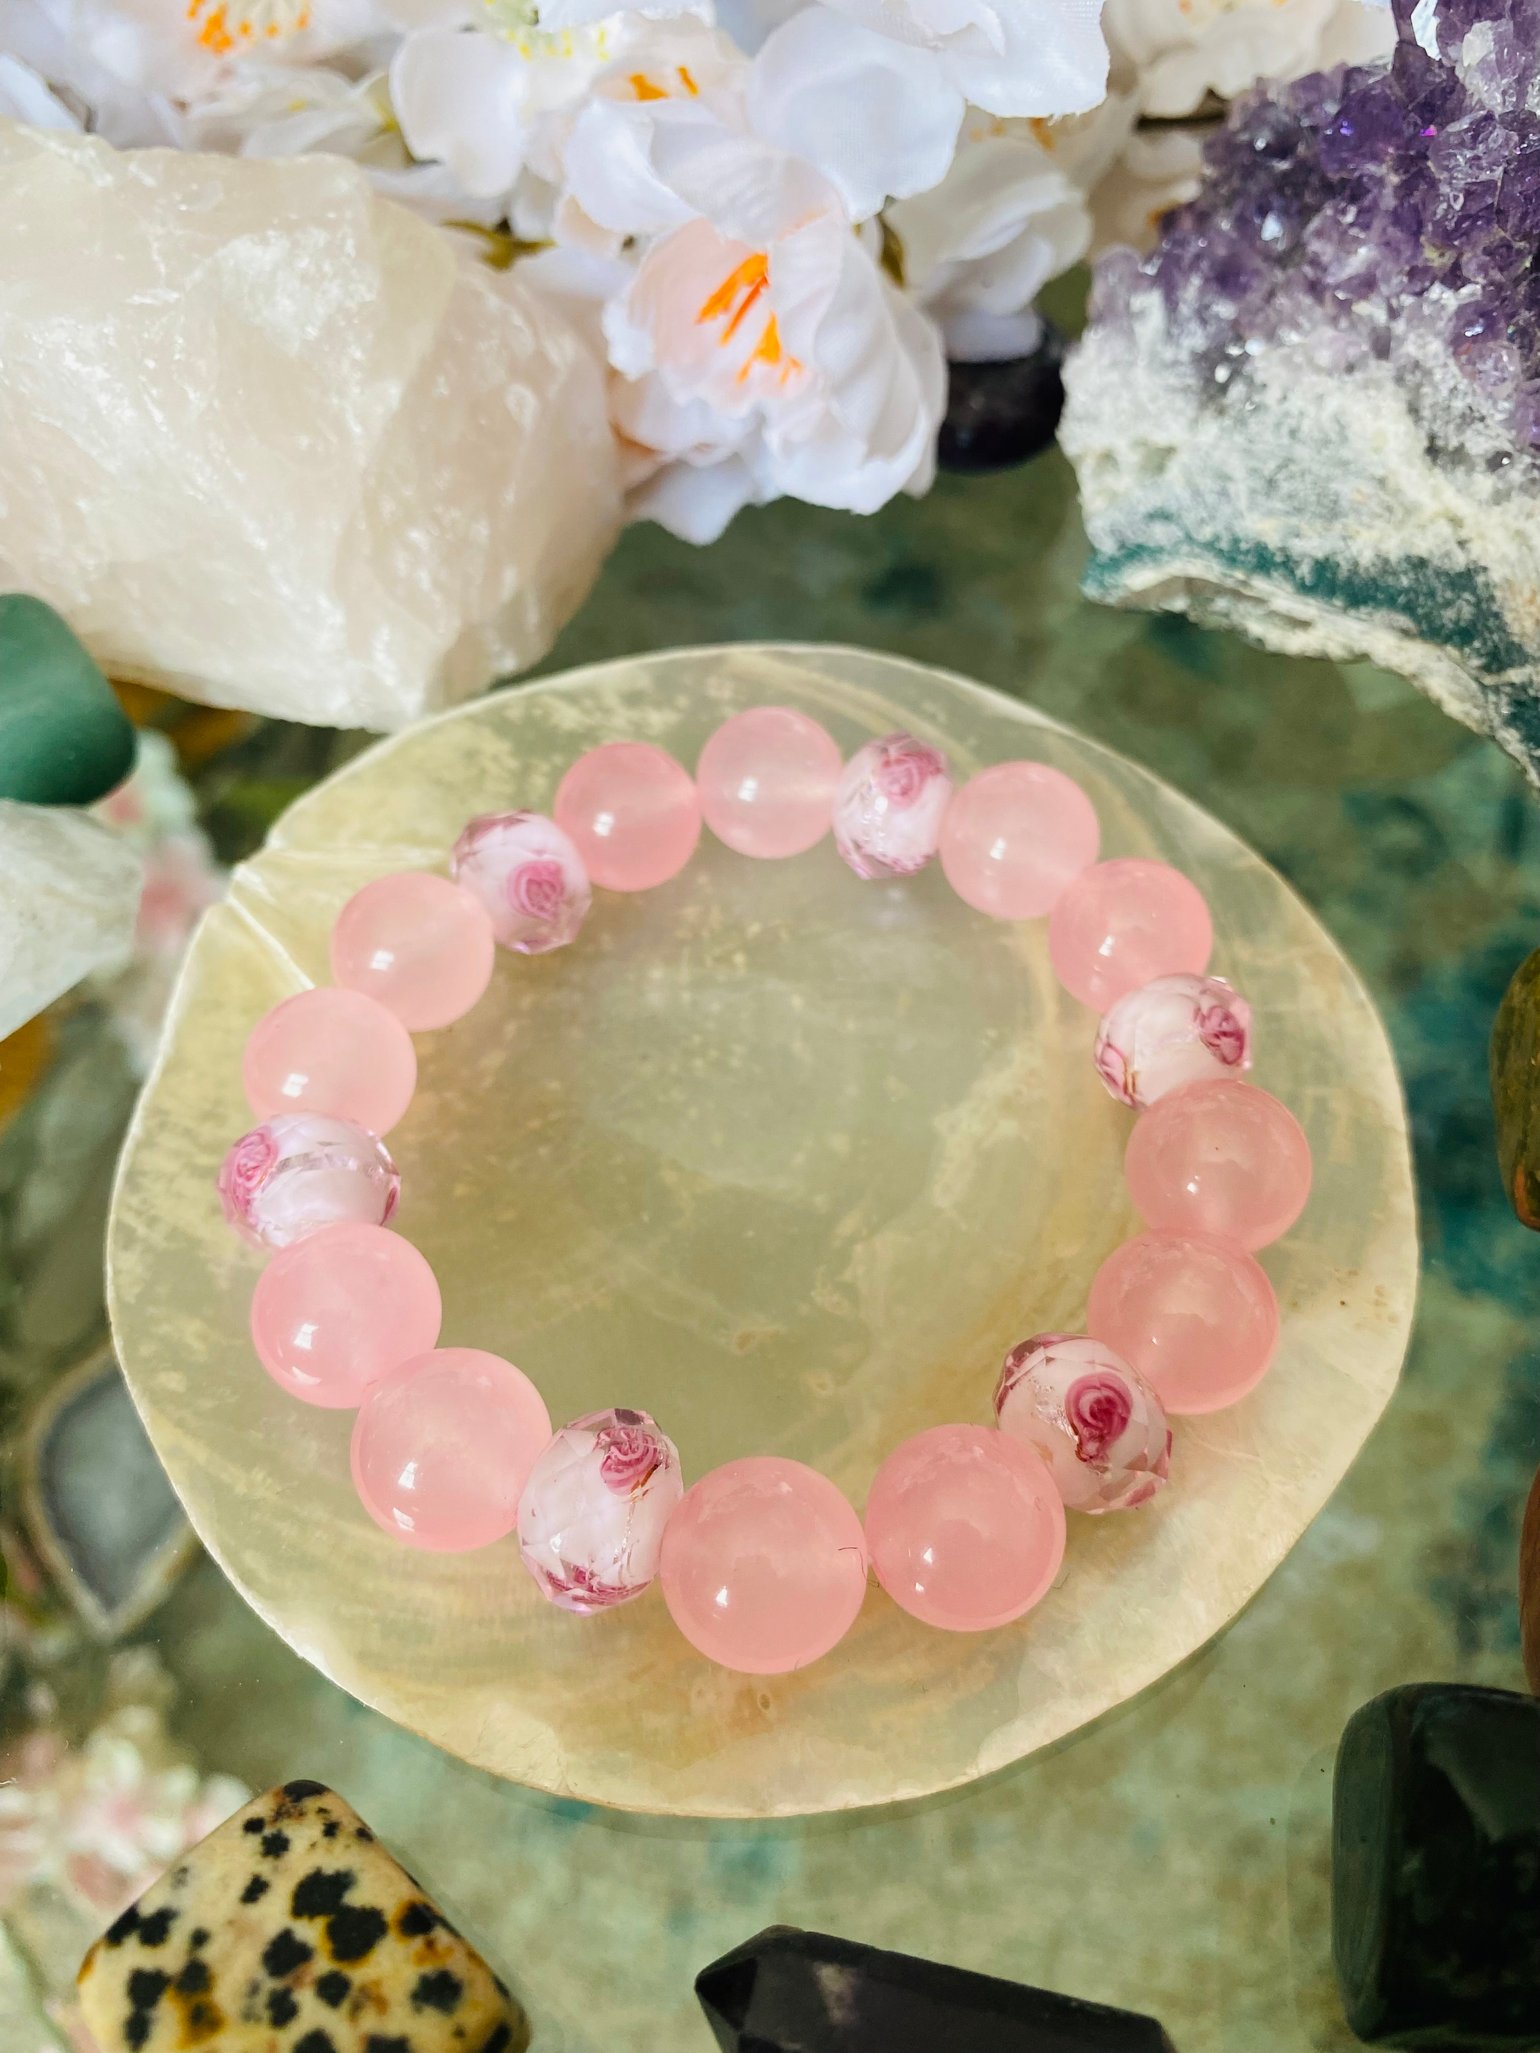 Image of “True Love” 12mm Rose Quartz Bracelet with Rose Accent beads